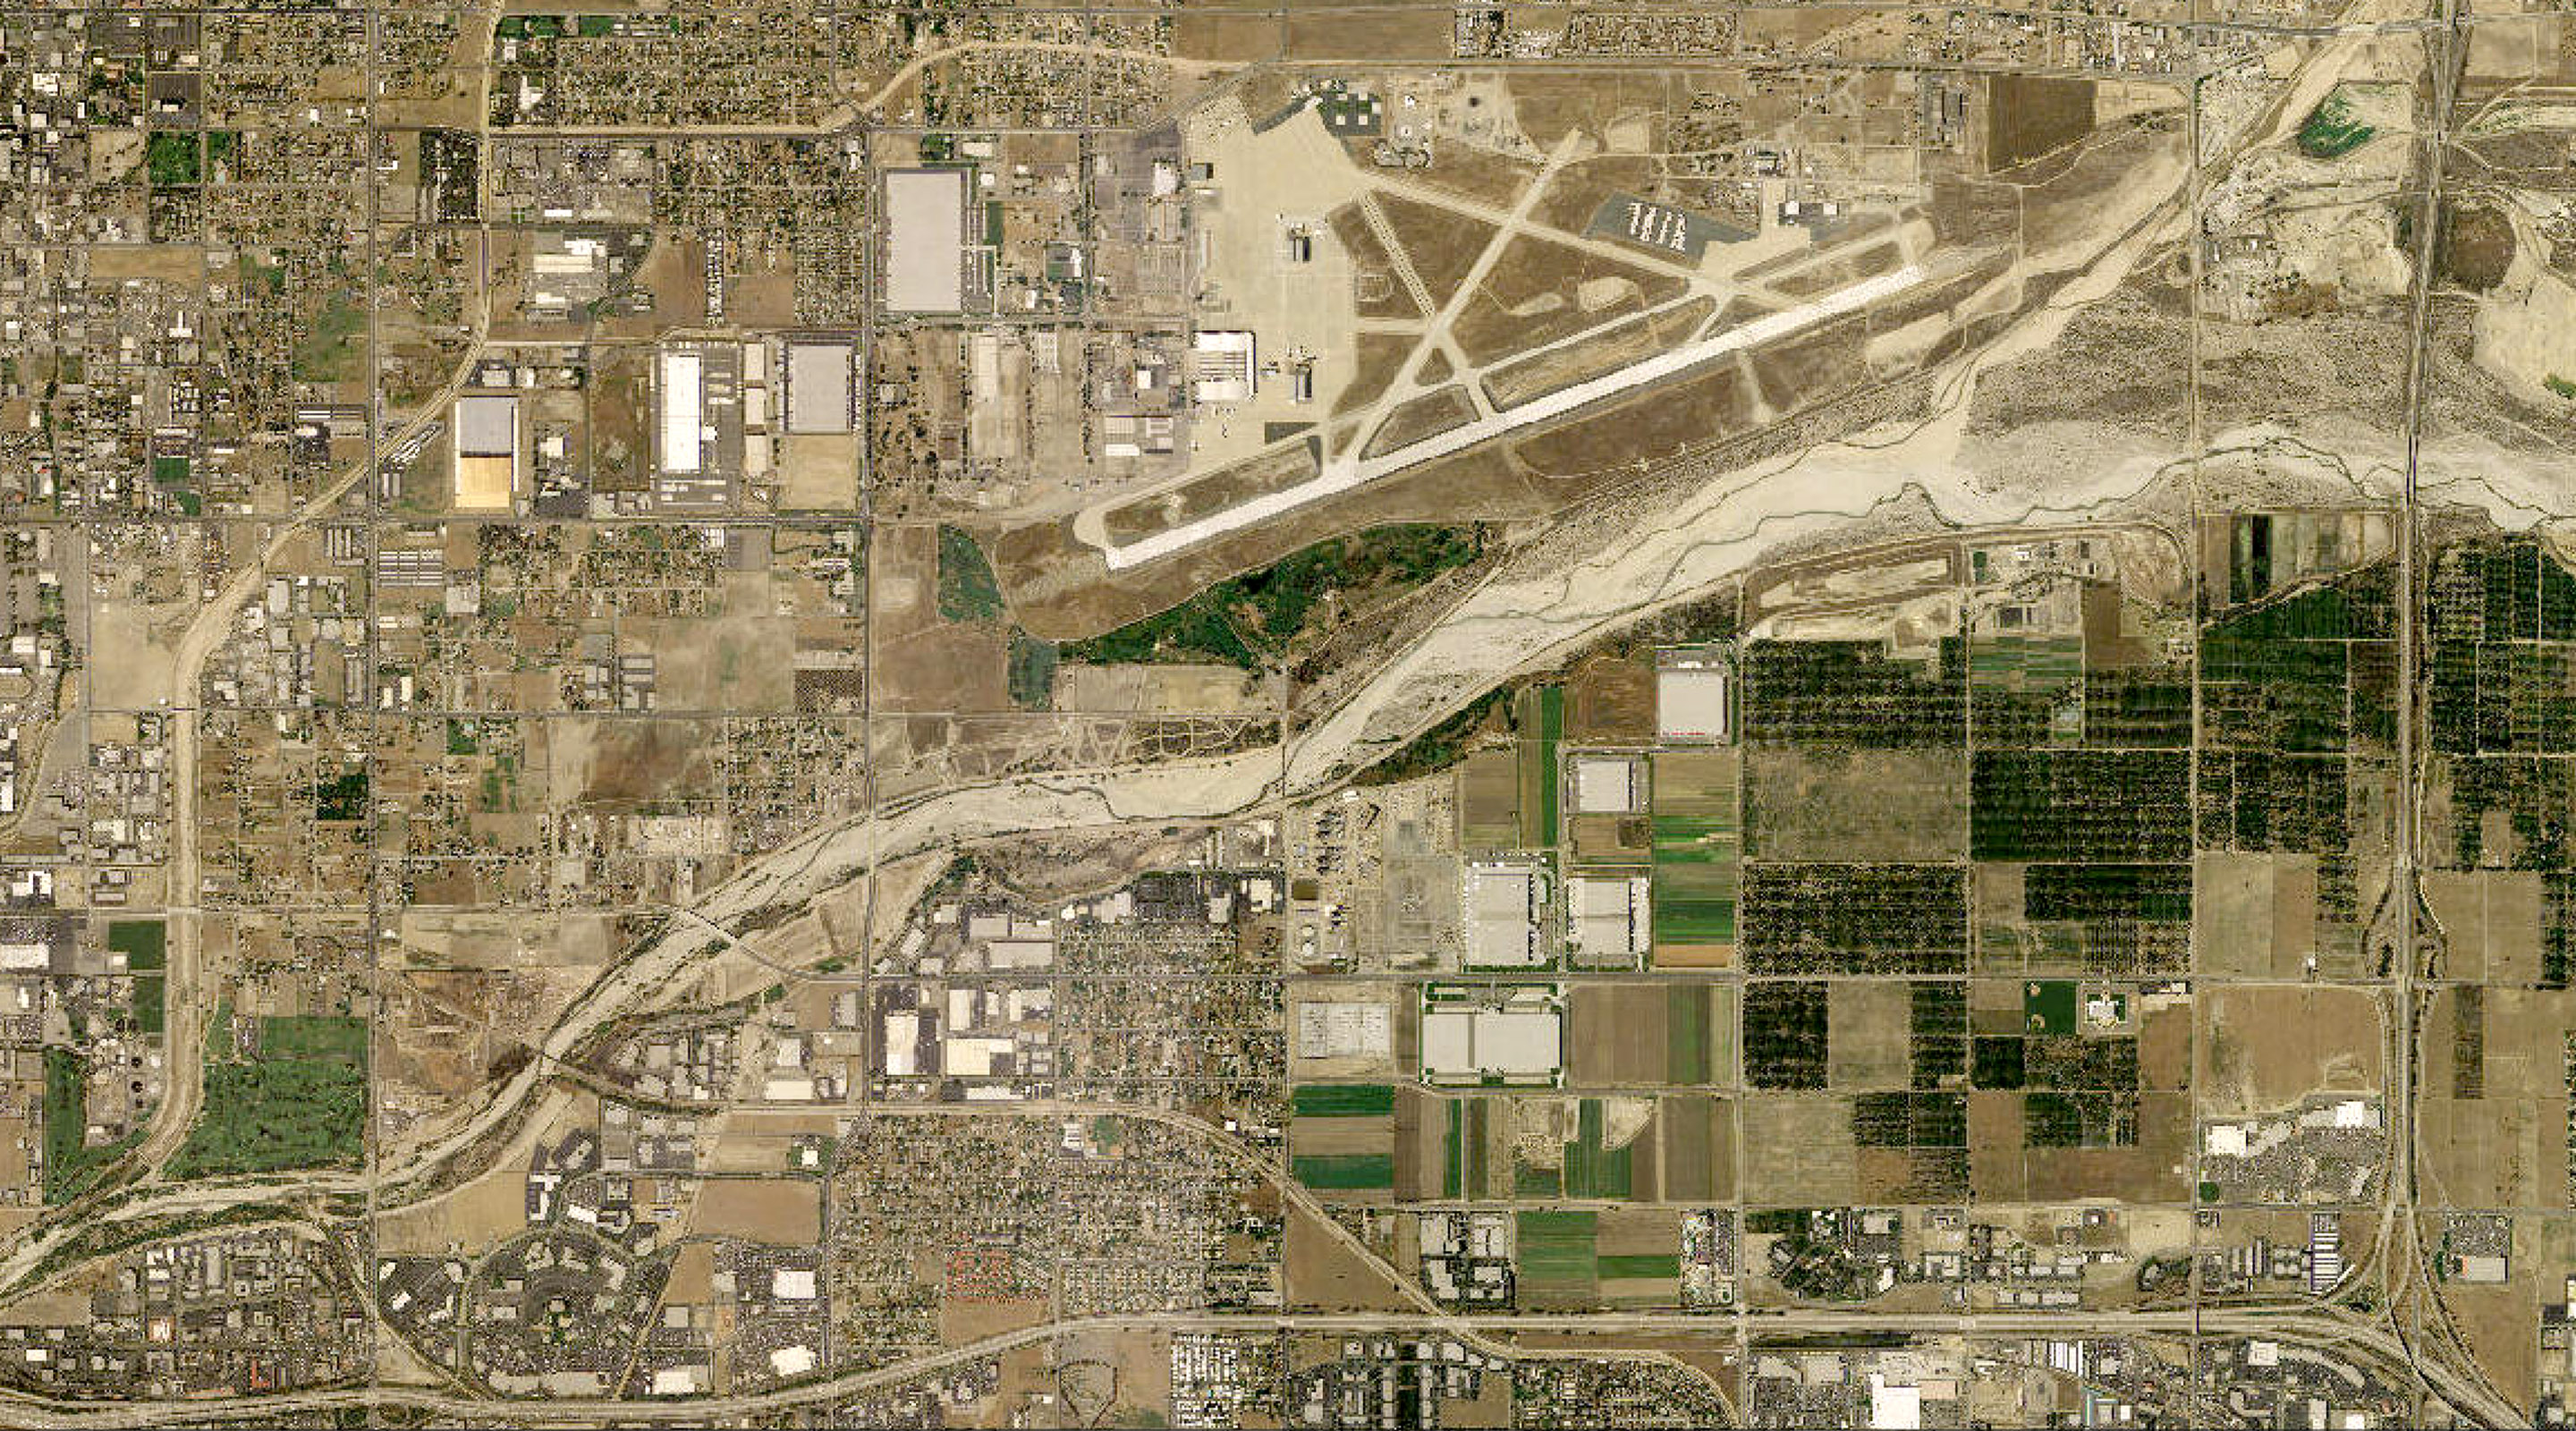 San Bernardino airport warehouses